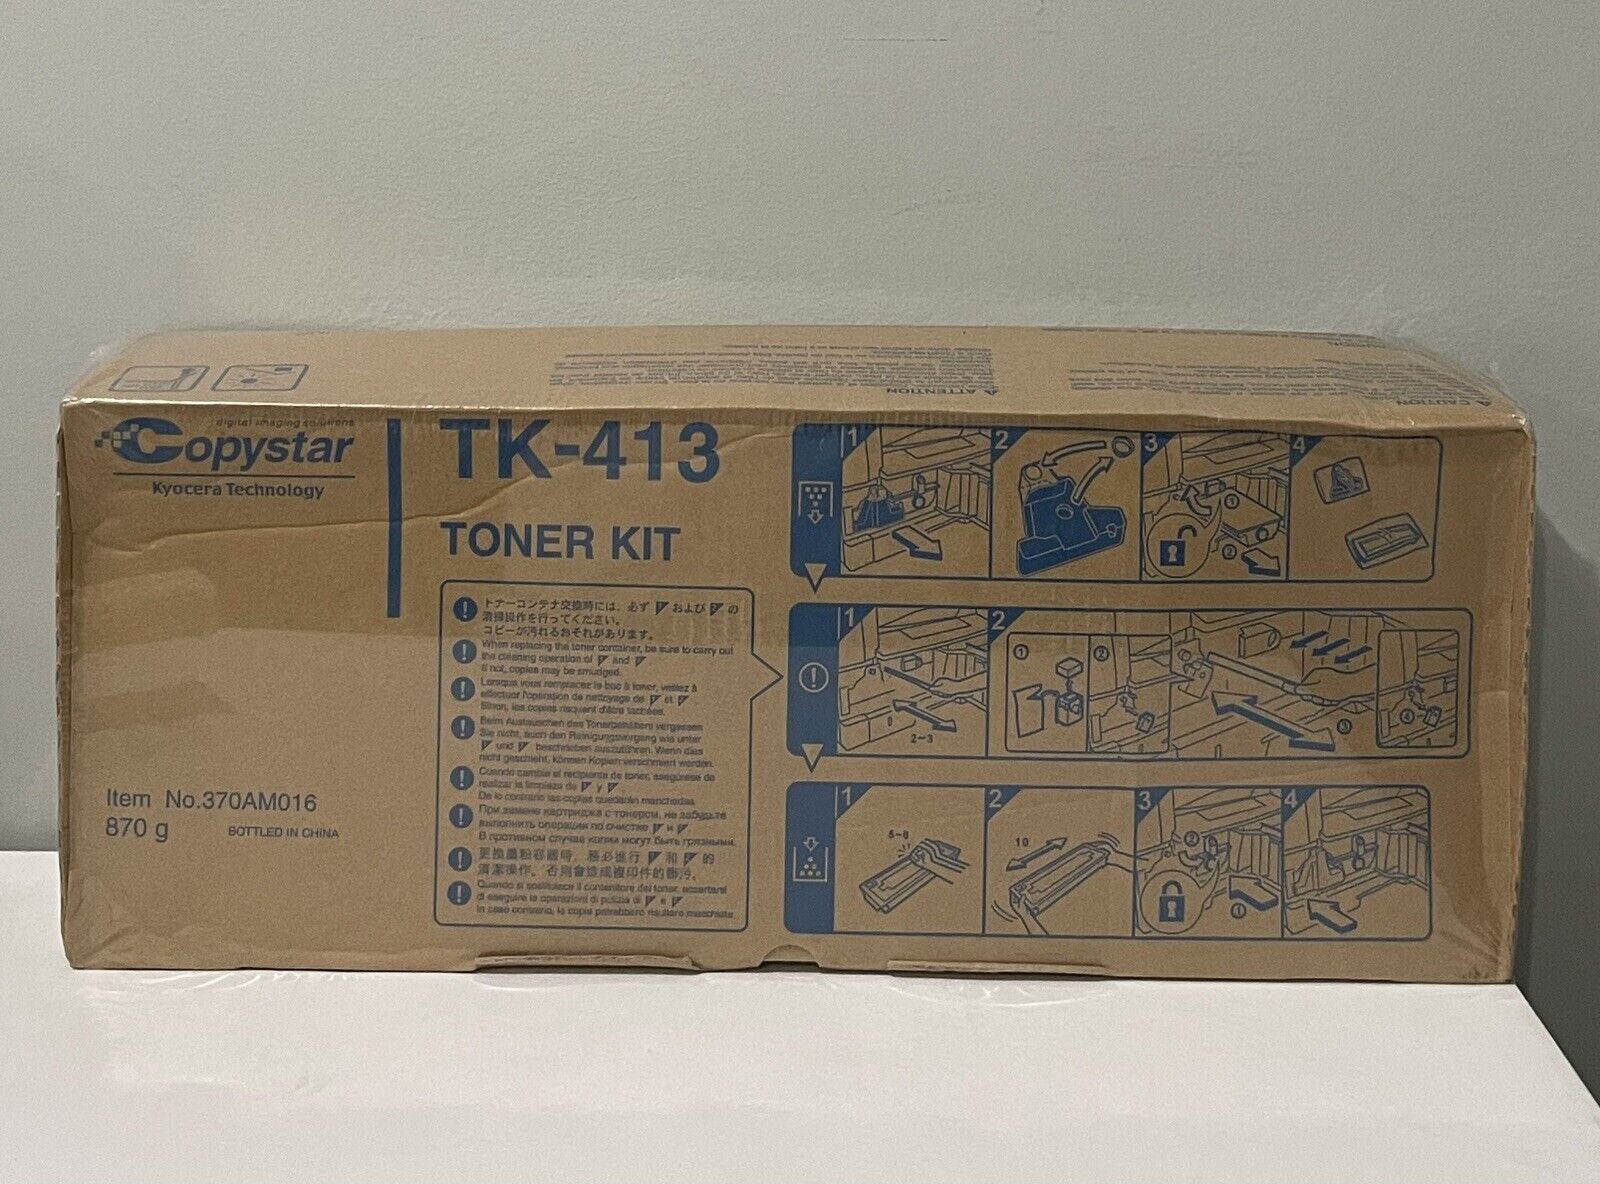 Kyocera Copystar TK-413 Black Toner Kit 37034006 for CS-1620 New Sealed